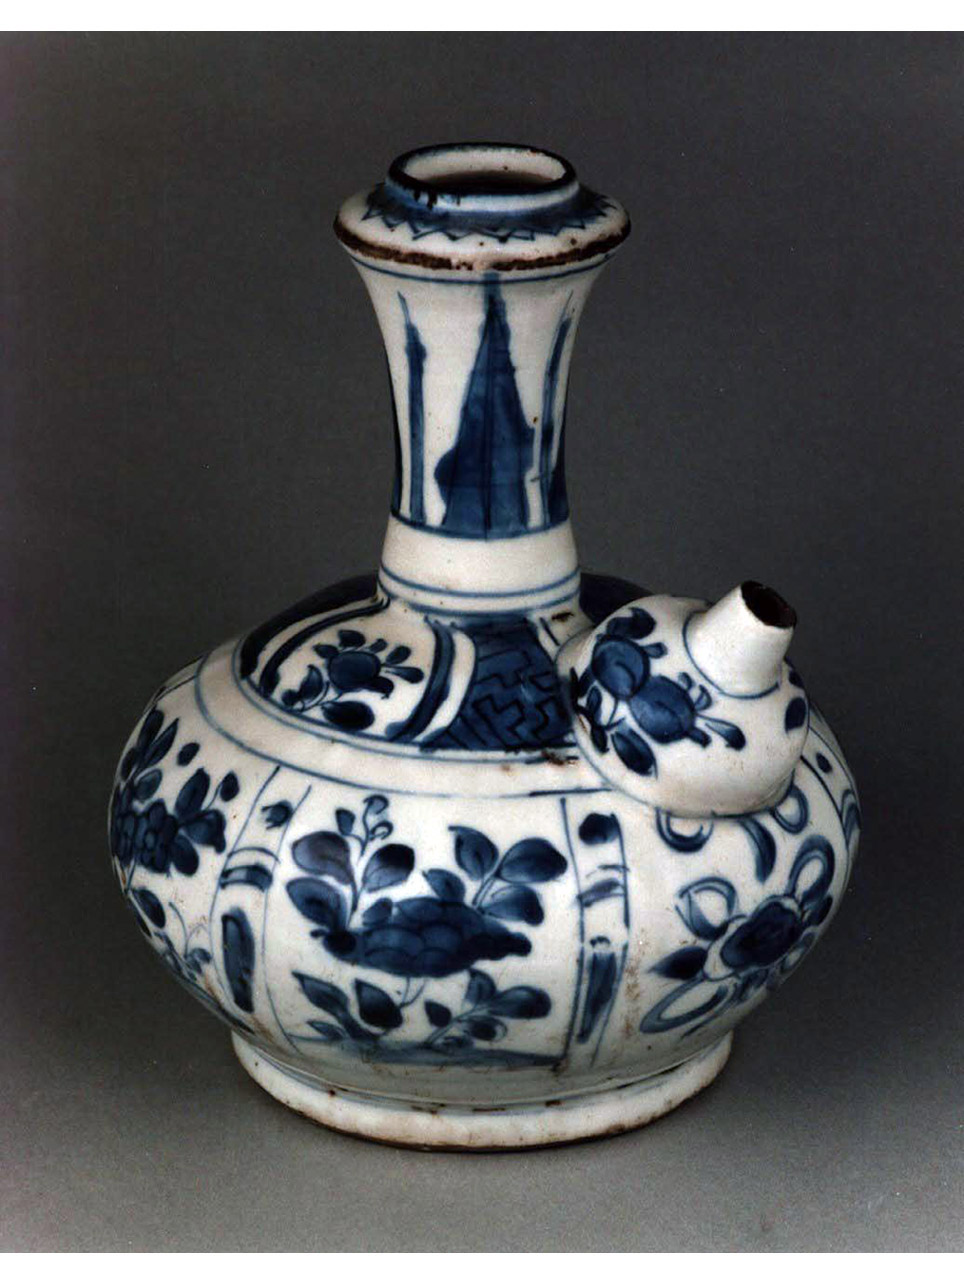 motivi decorativi vegetali e animali (brocca) - manifattura cinese (secc. XVI/ XVII)